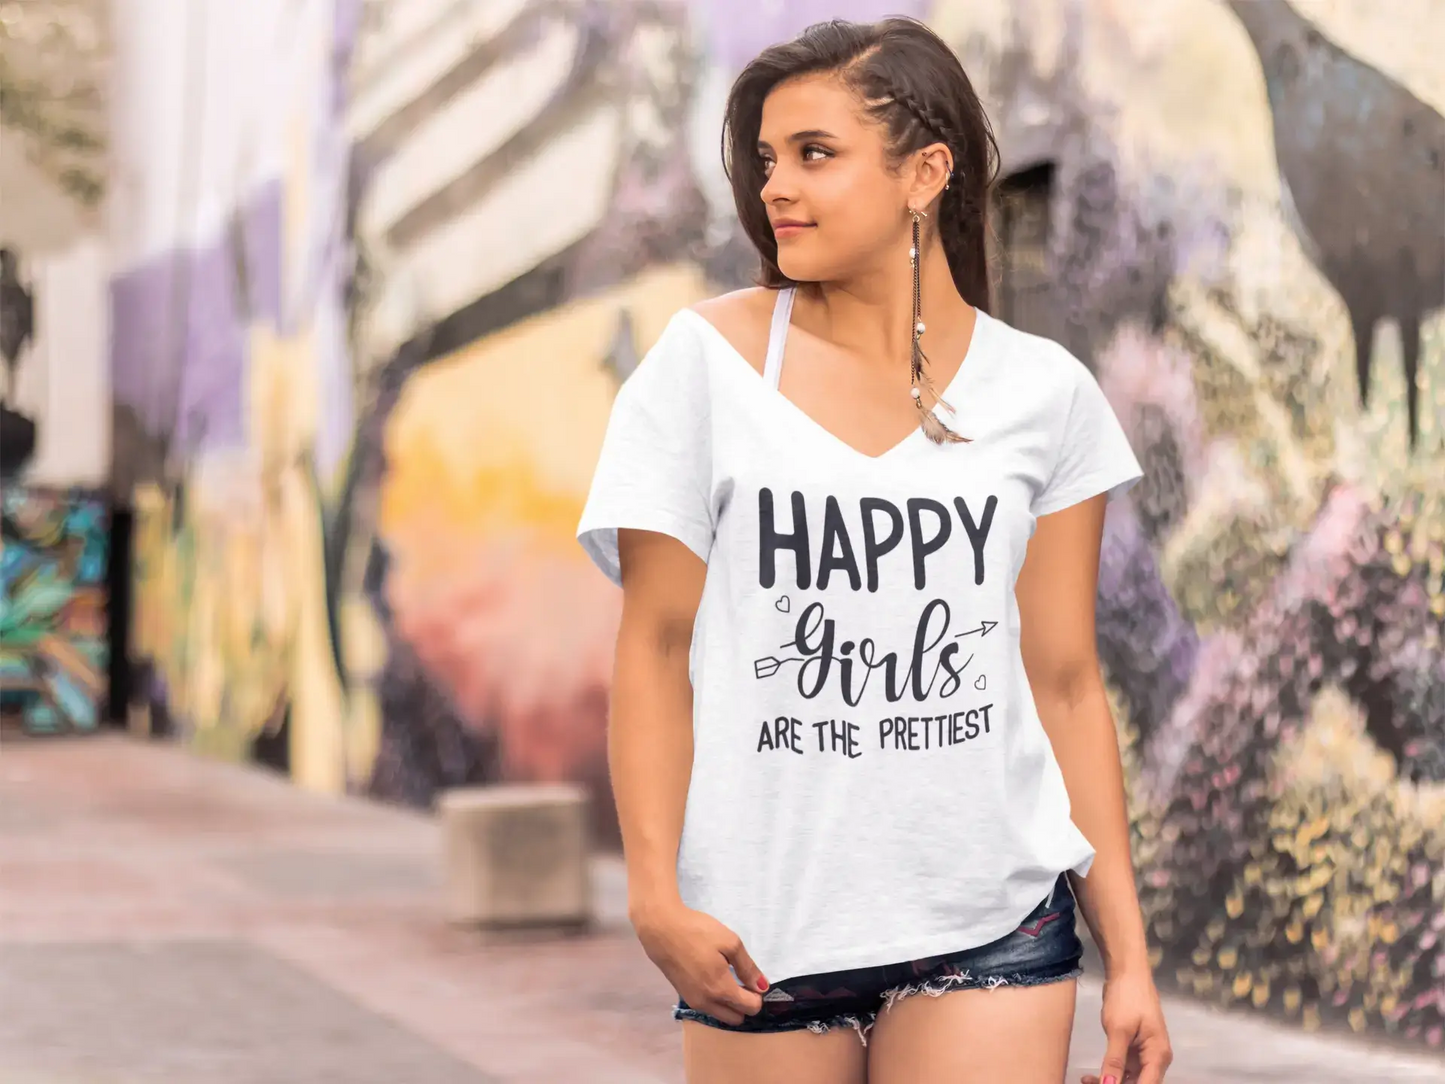 ULTRABASIC Women's T-Shirt Happy Girls Are the Prettiest - Short Sleeve Tee Shirt Gift Tops